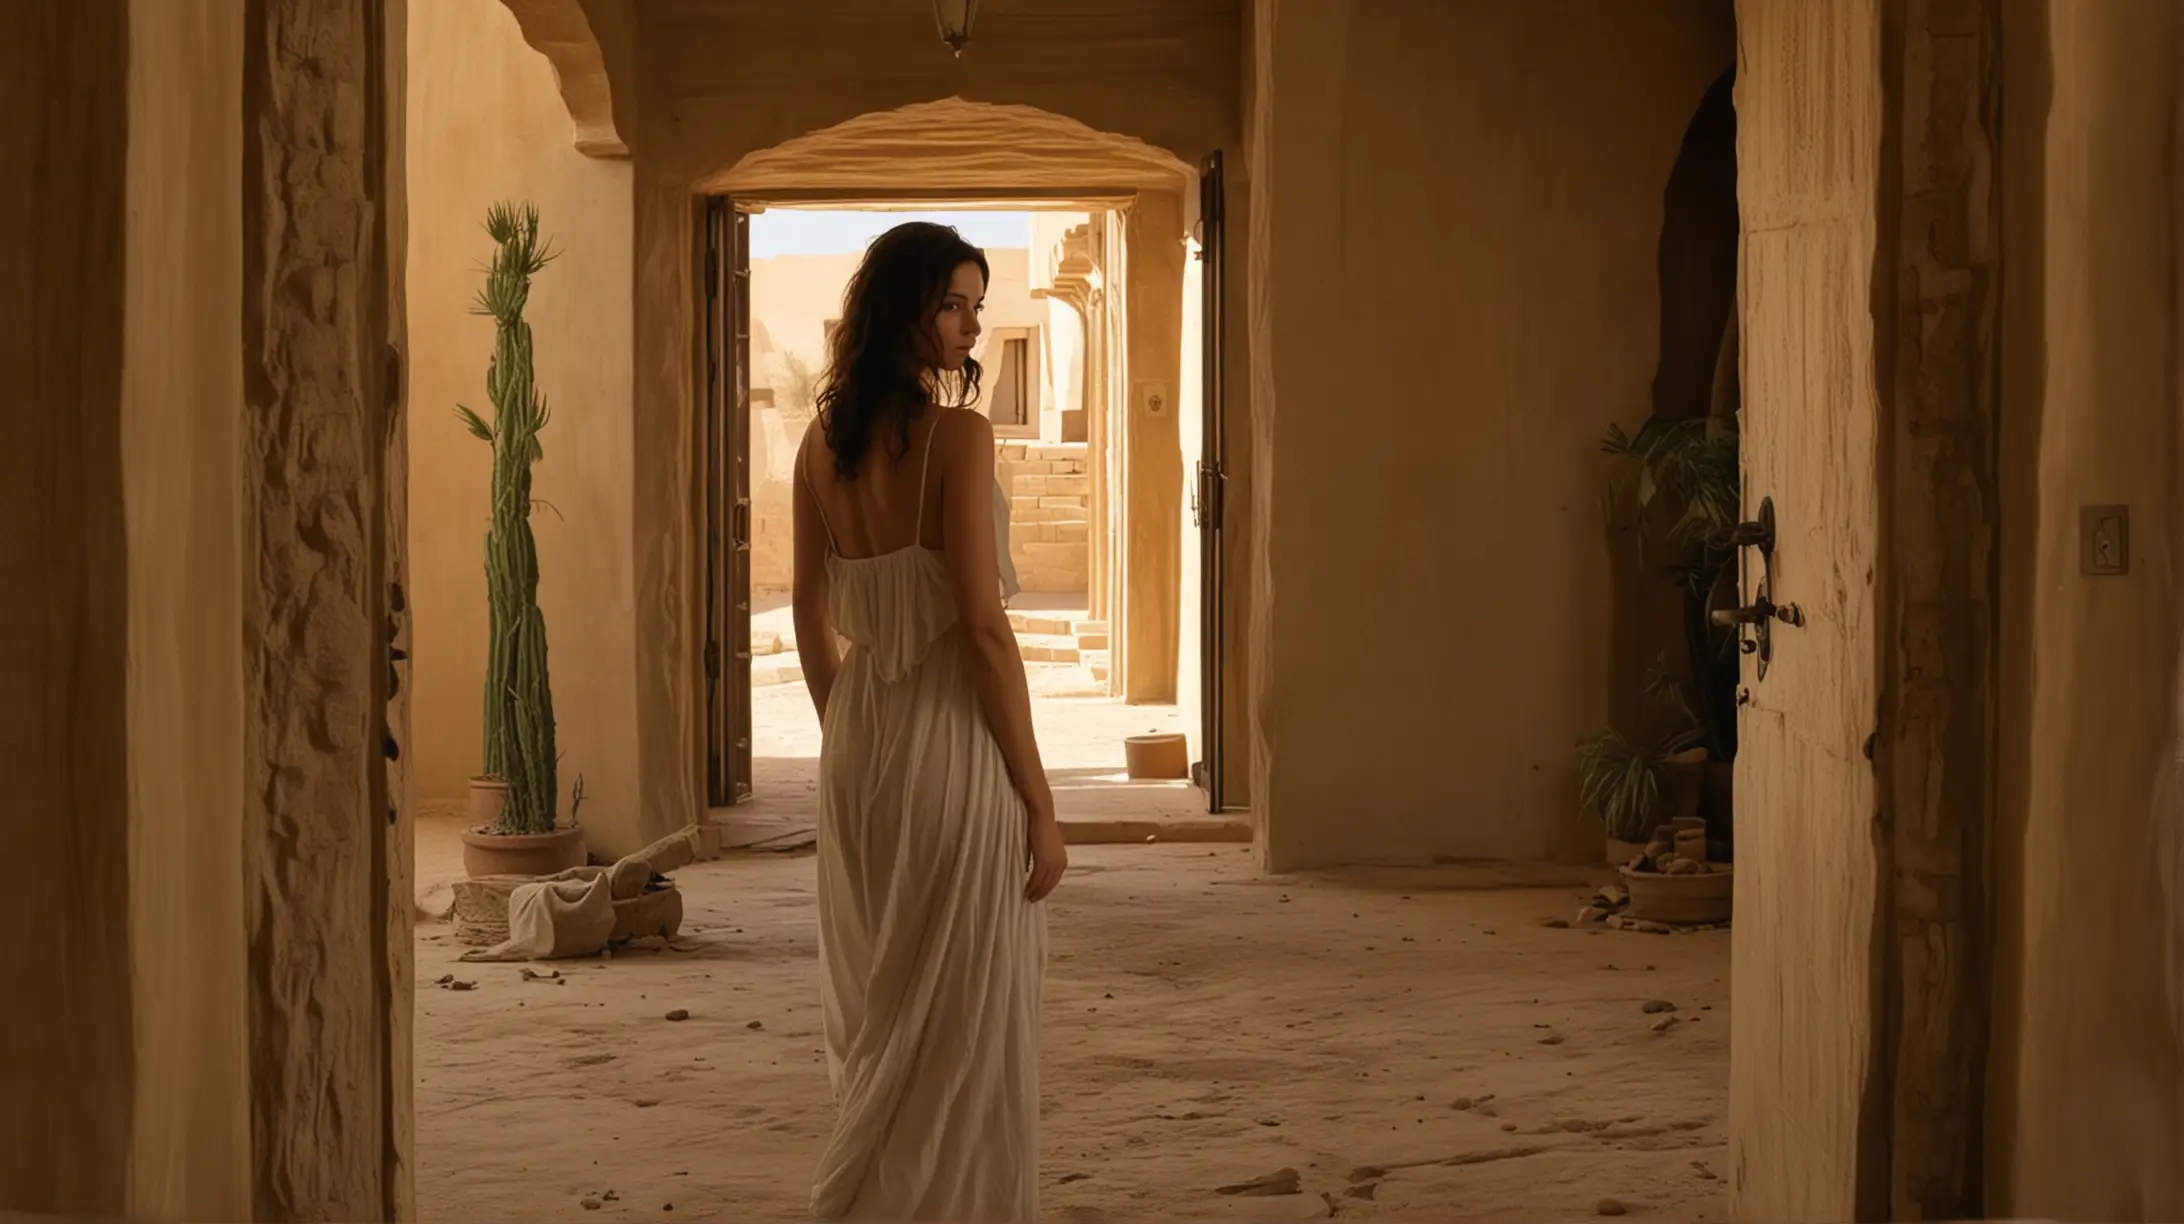 Elegant Woman Exiting Bedroom Door in Biblical Desert Palace Setting